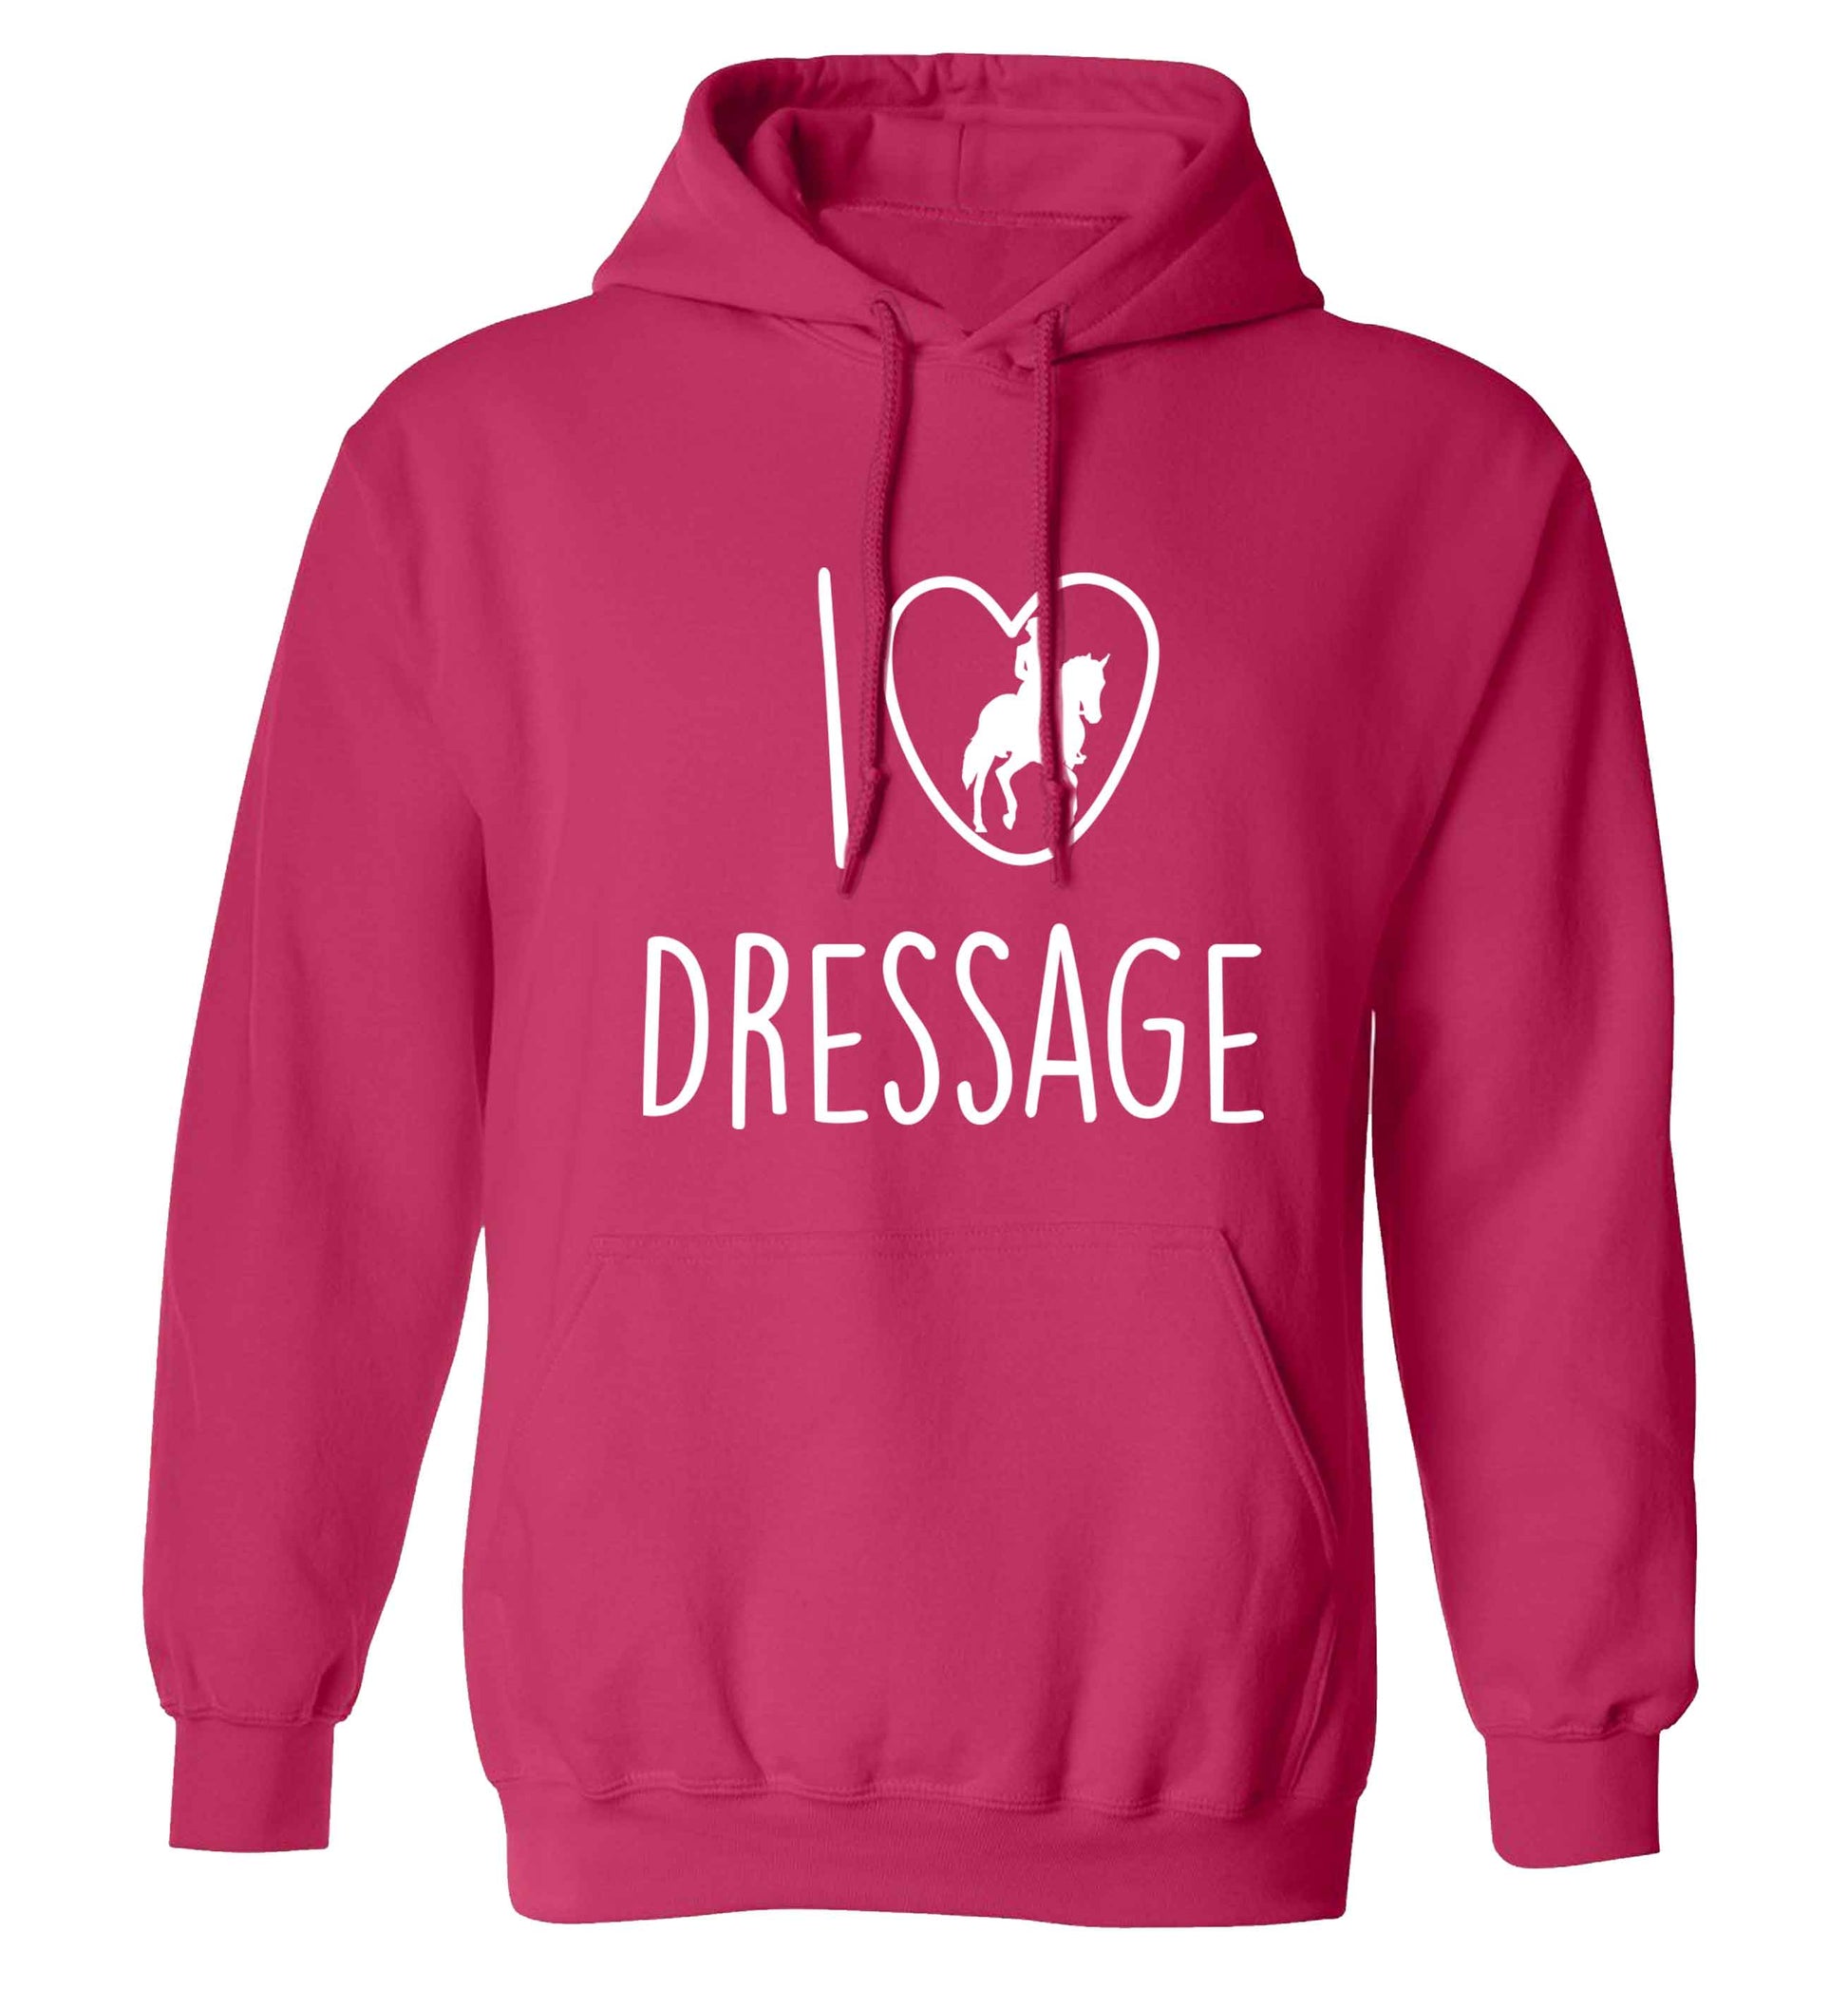 I love dressage adults unisex pink hoodie 2XL